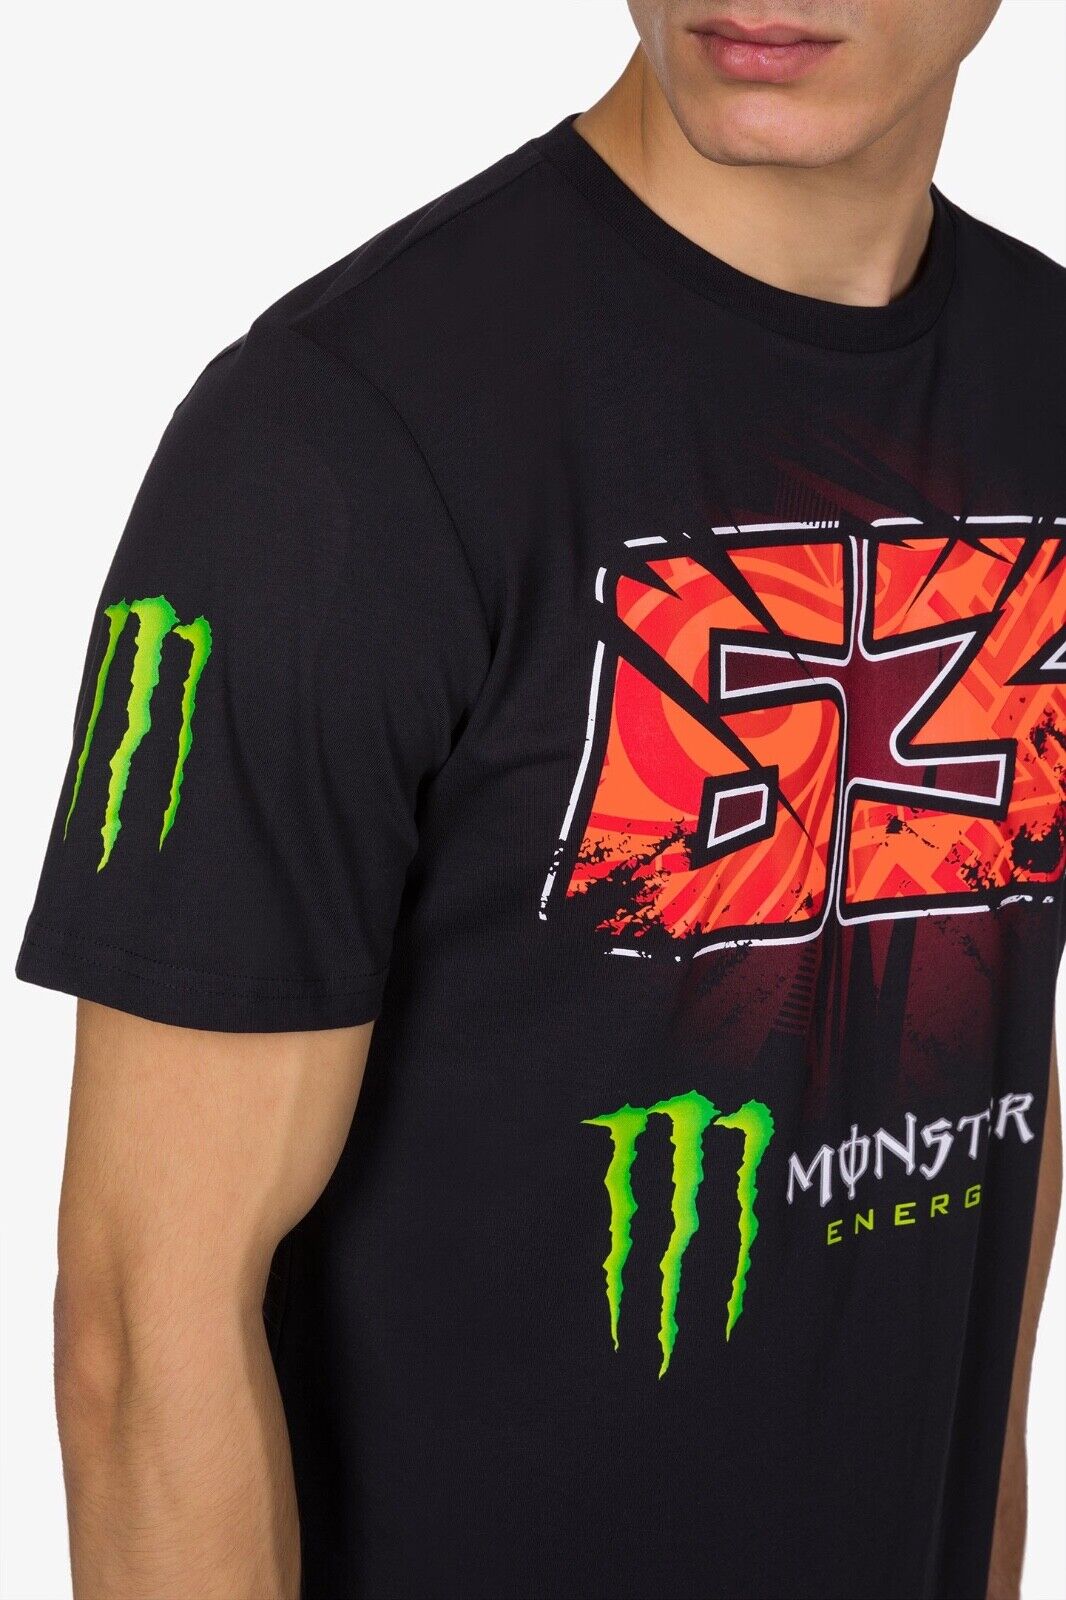 Official Francesco Bagnaia Dual Monster T Shirt - Mbmts 476504